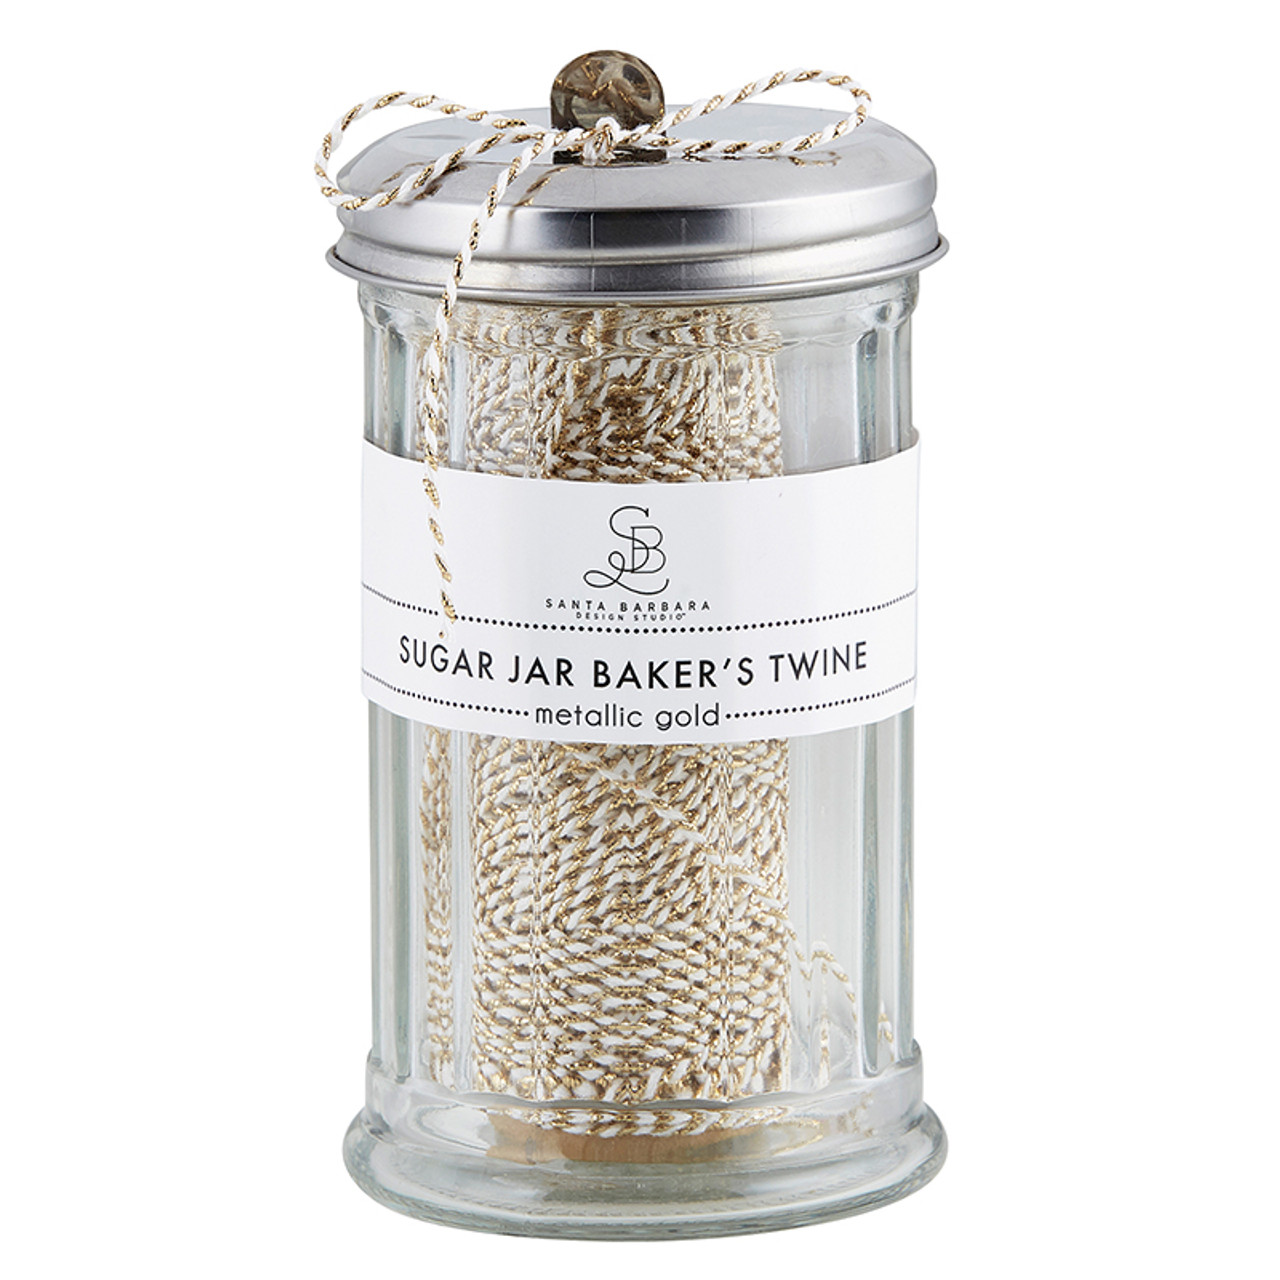 Sugar Jar Bakers Twine - Metallic Gold - [Consumer]Santa Barbara